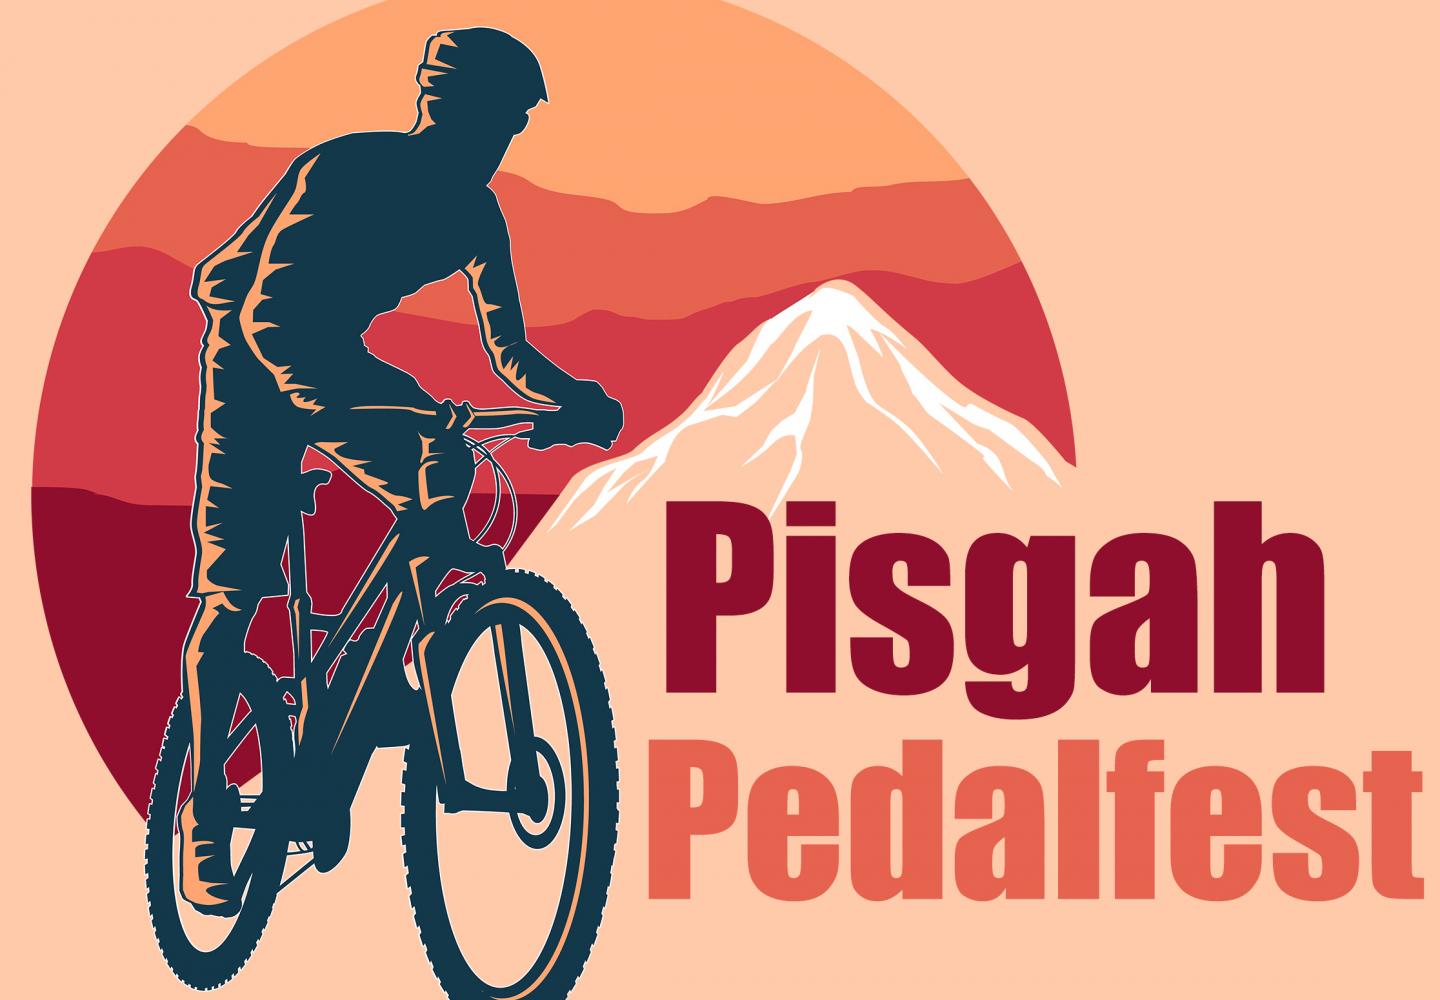 Pisgah Pedalfest